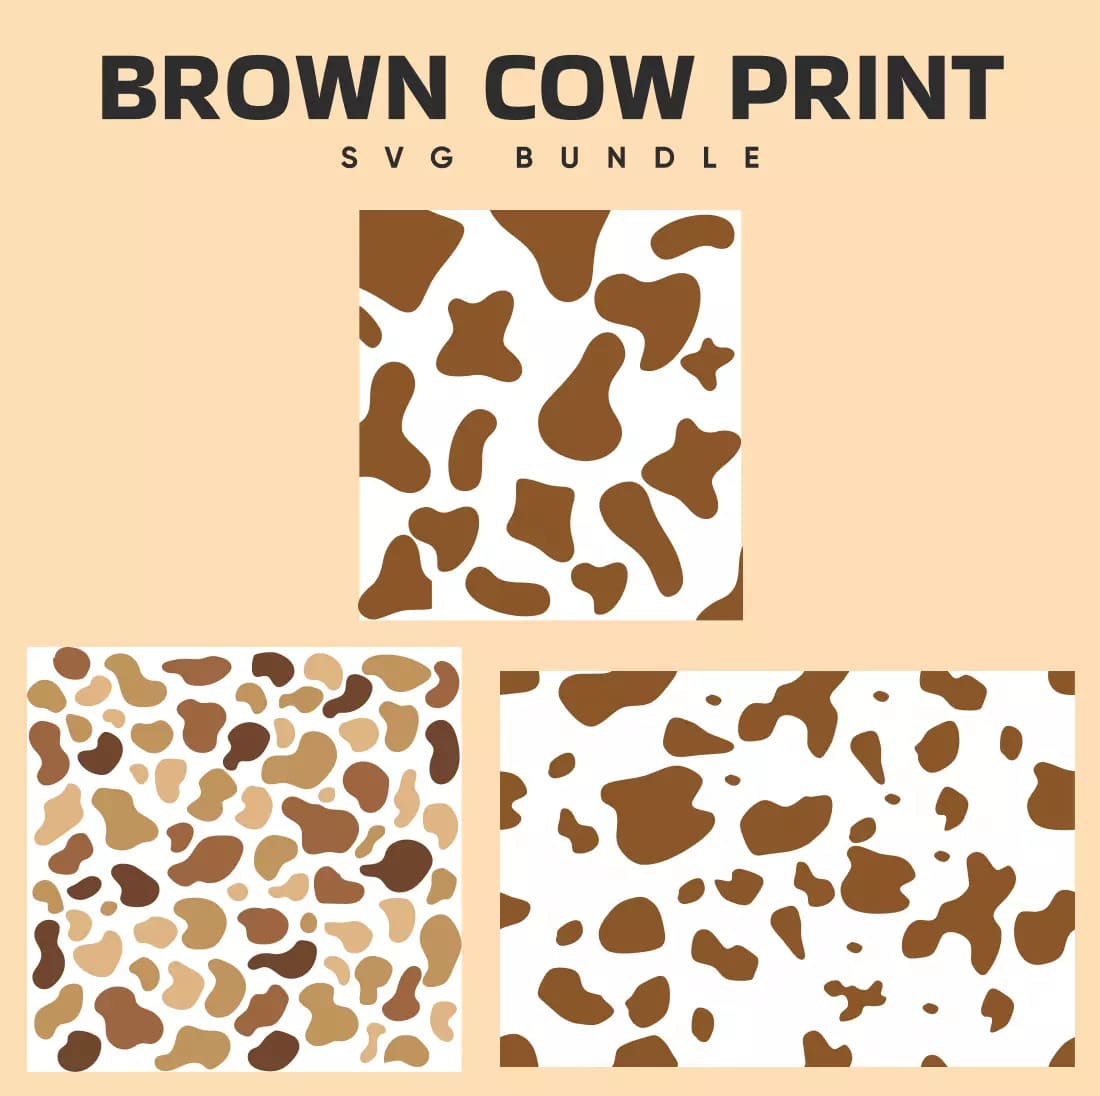 Brown cow print svg bundle.